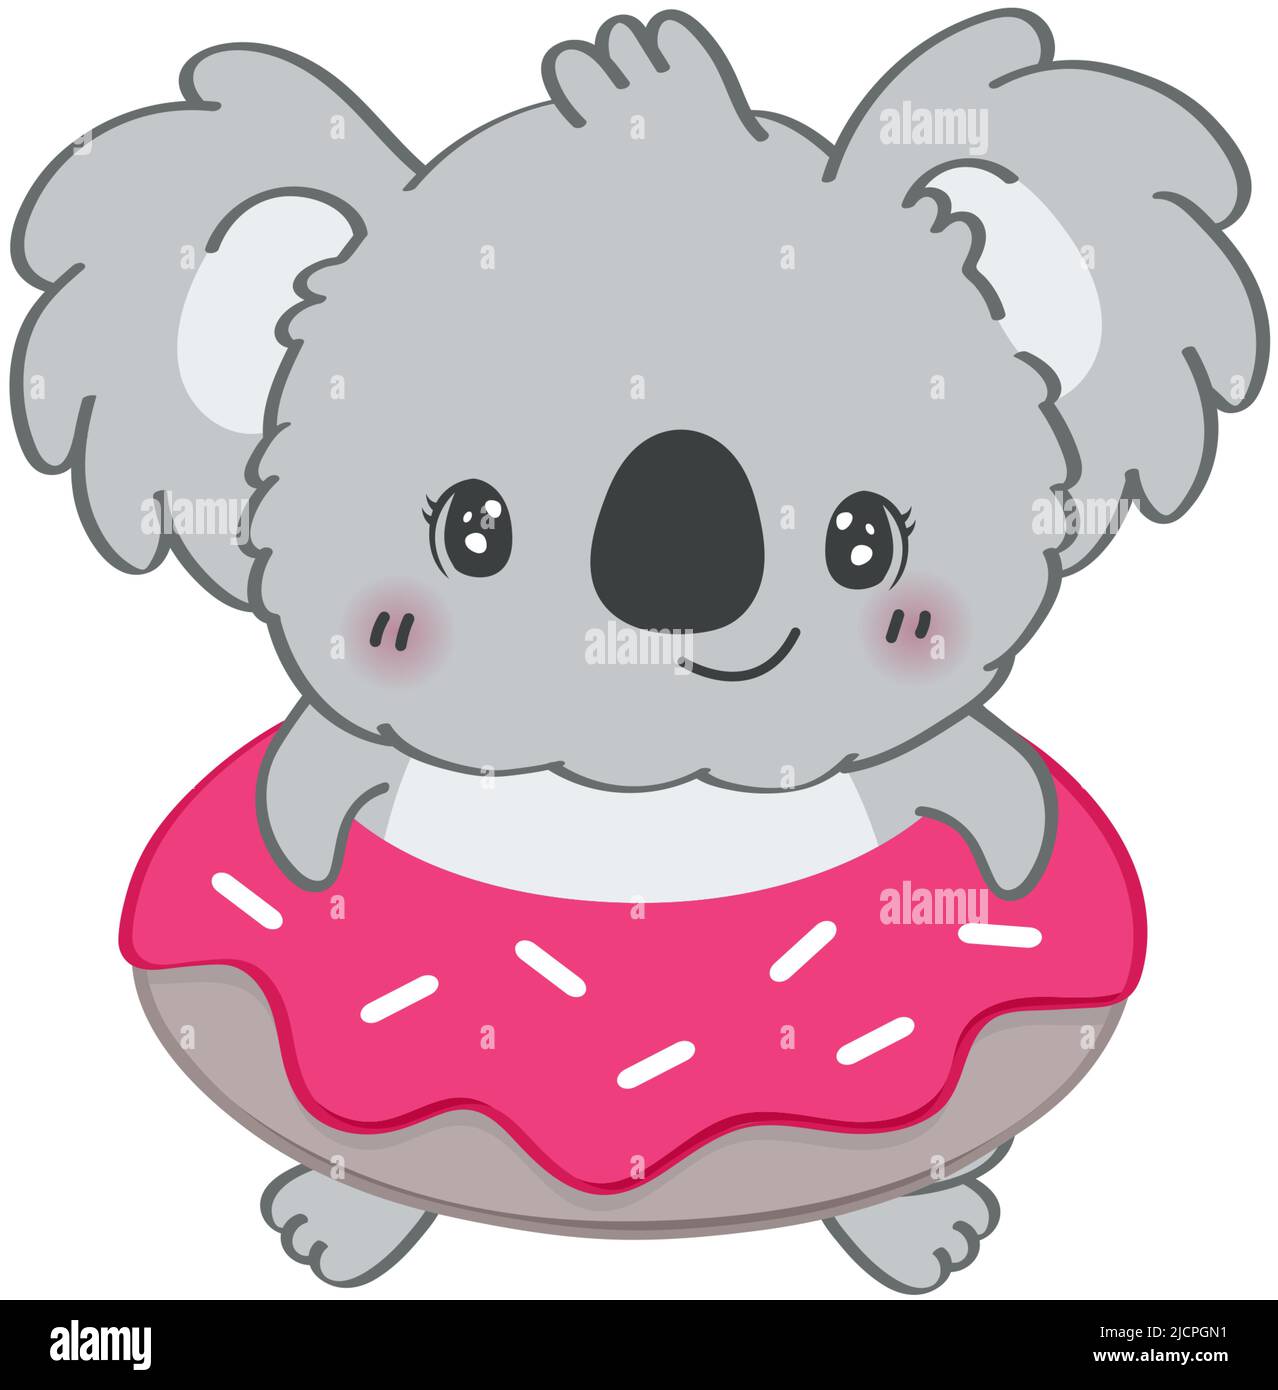 Cute Clipart Koala Bear Illustration in Cartoon Style. Cartoon